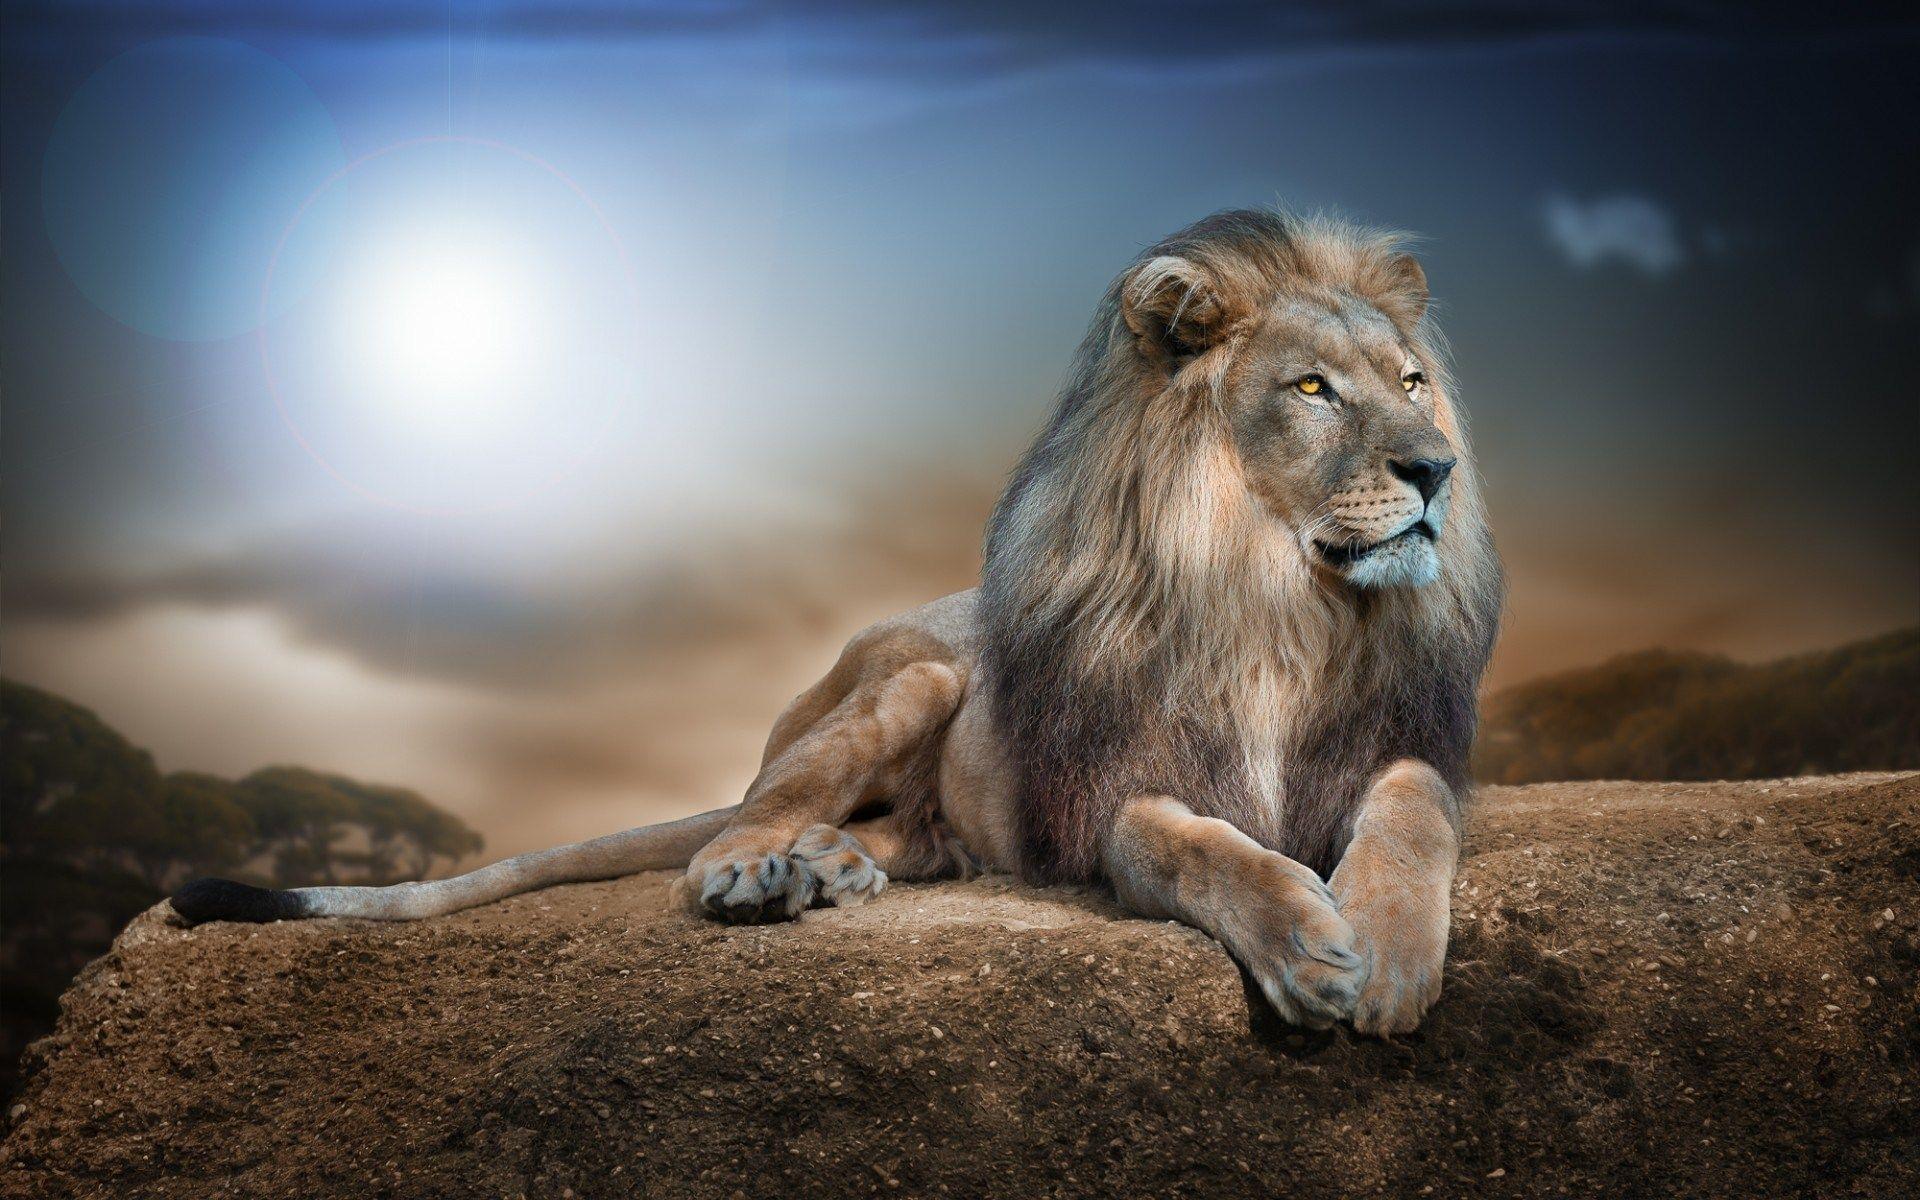 Narnia, aslan roaring HD wallpaper